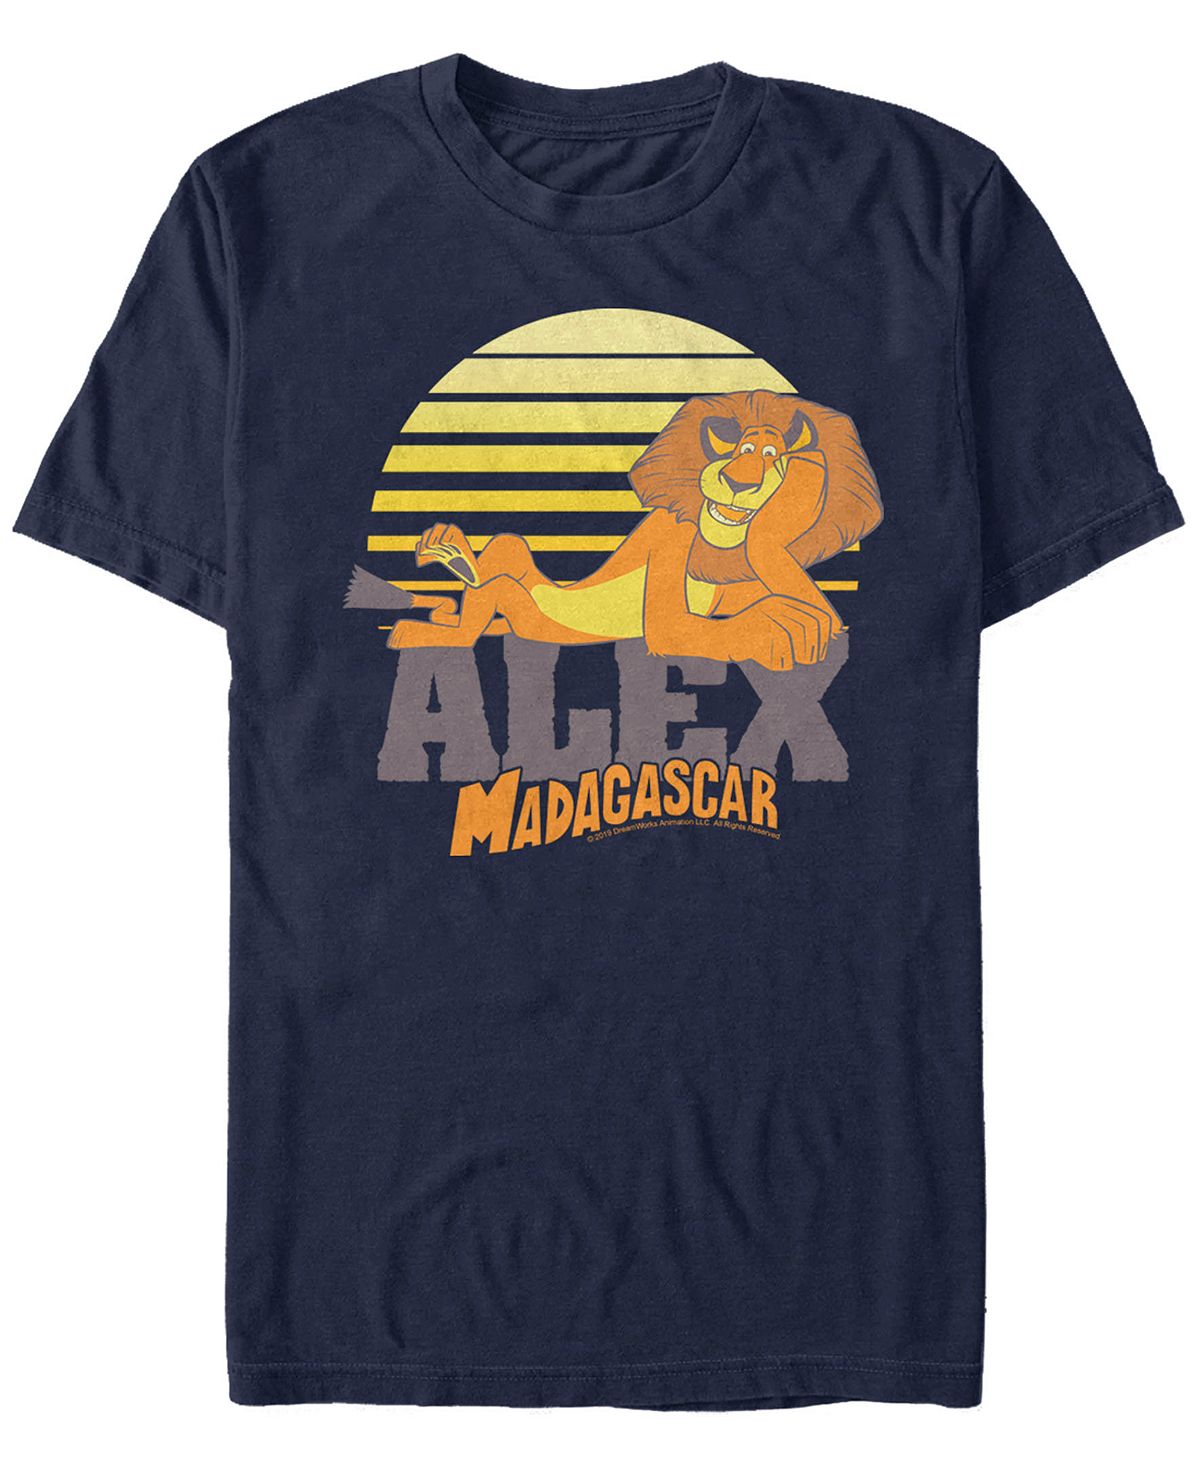 Мужская футболка alex с коротким рукавом madagascar Fifth Sun, синий мужская футболка с коротким рукавом eeyore not morning fifth sun синий